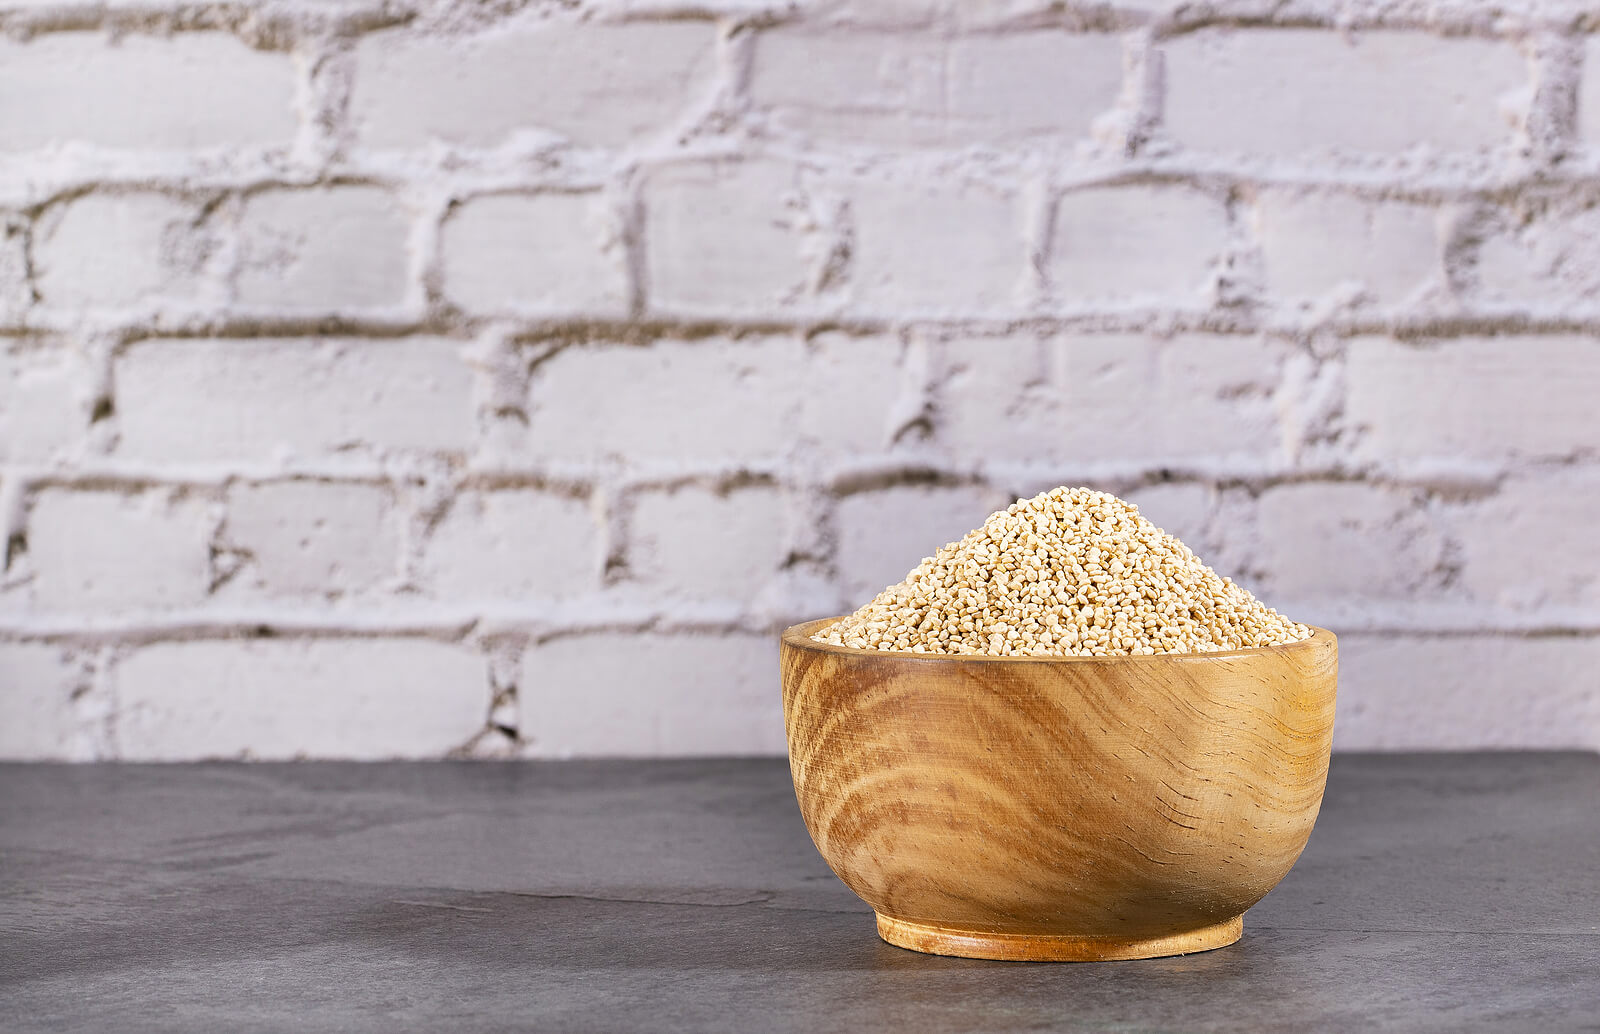 El buddha bowl tiene quinoa